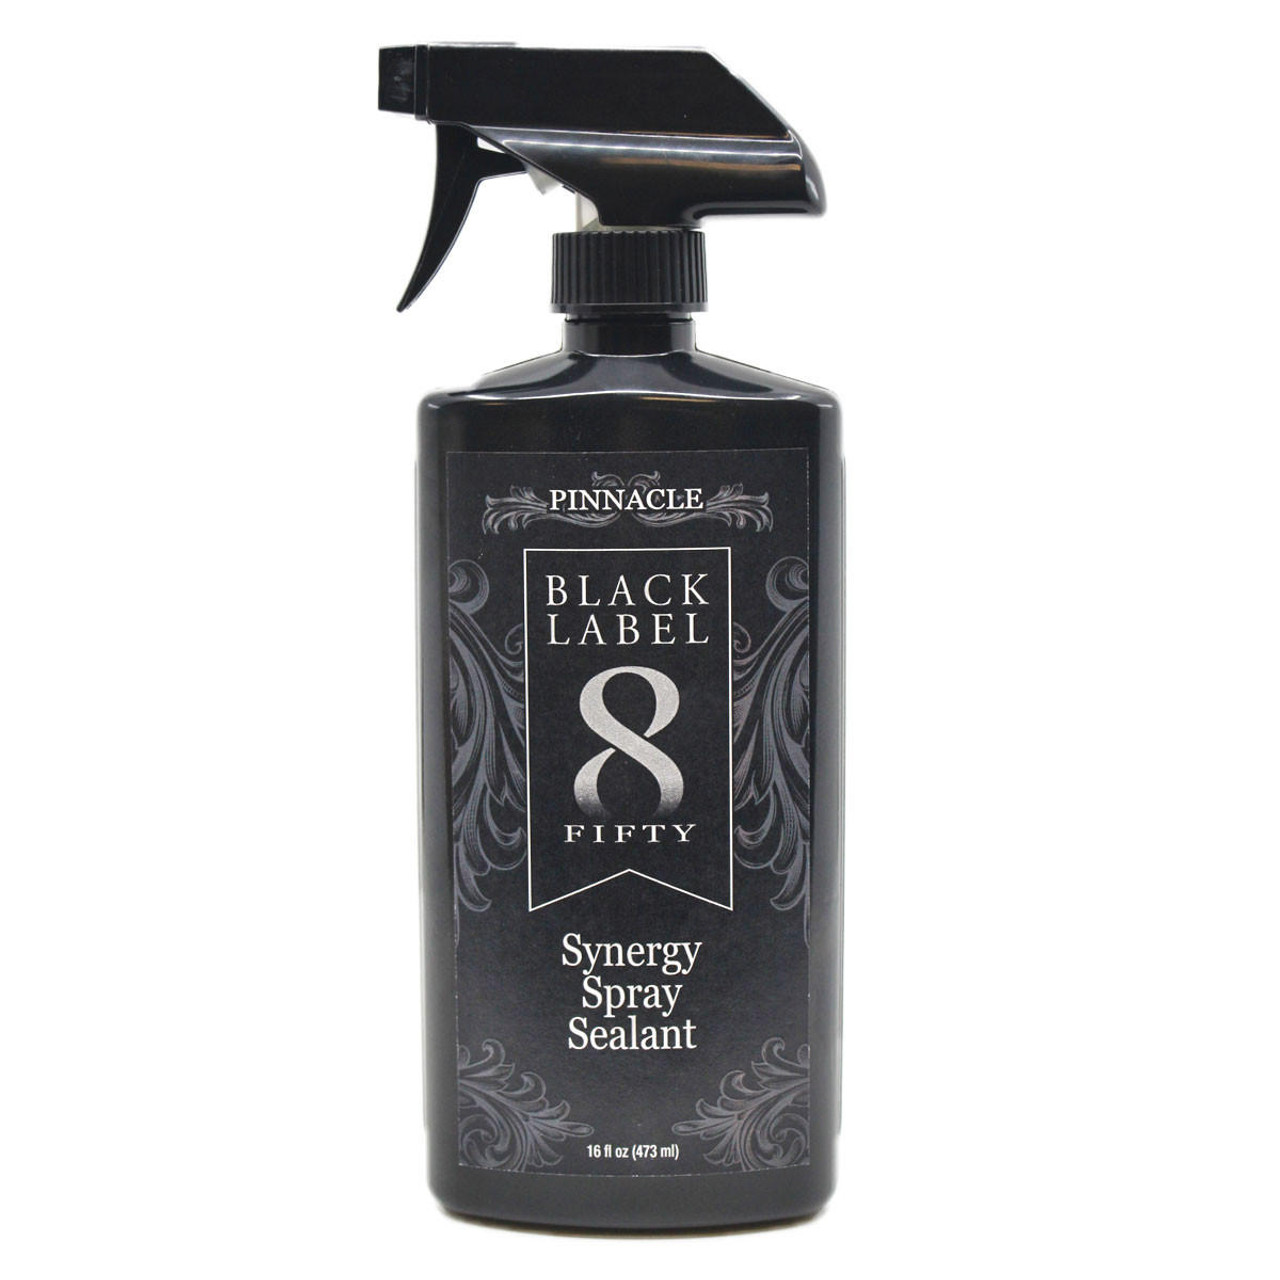 Pinnacle Black Label Synergy Spray Sealant